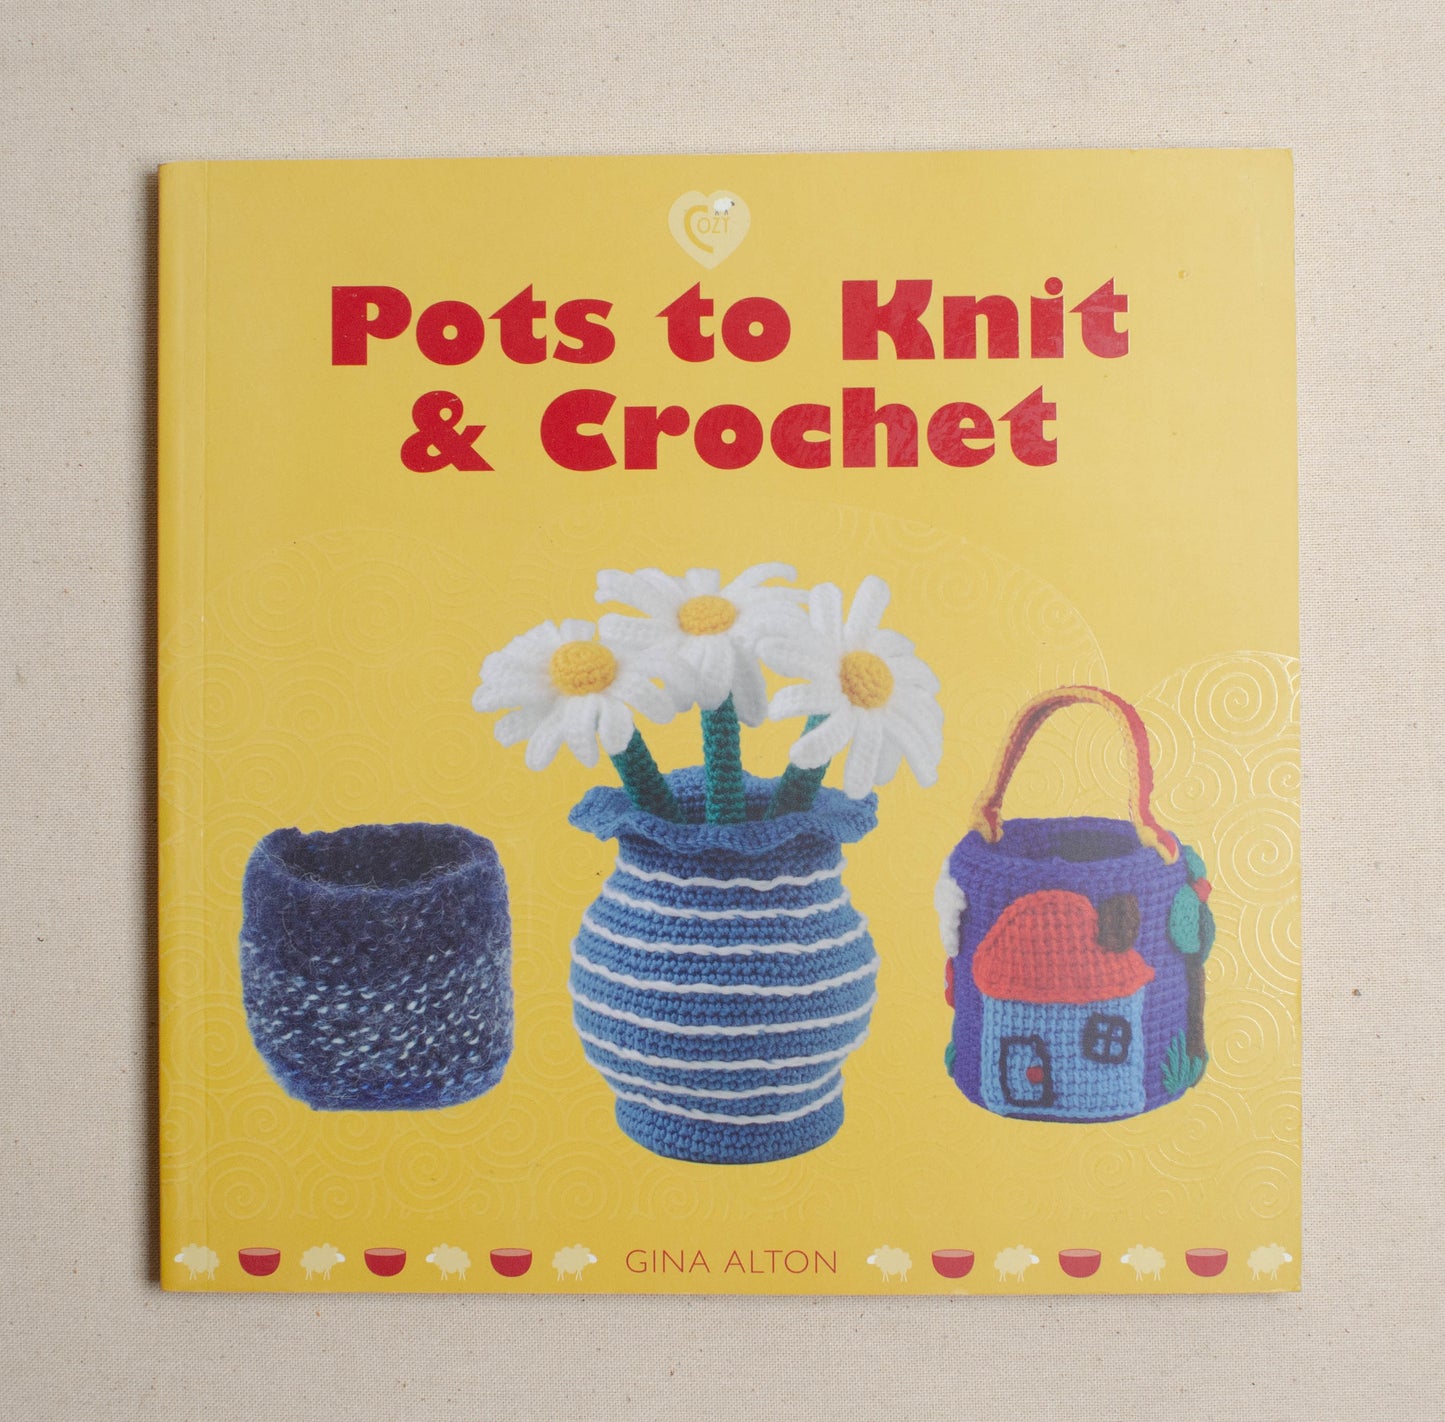 Pots to Knit & Crochet (Cozy)